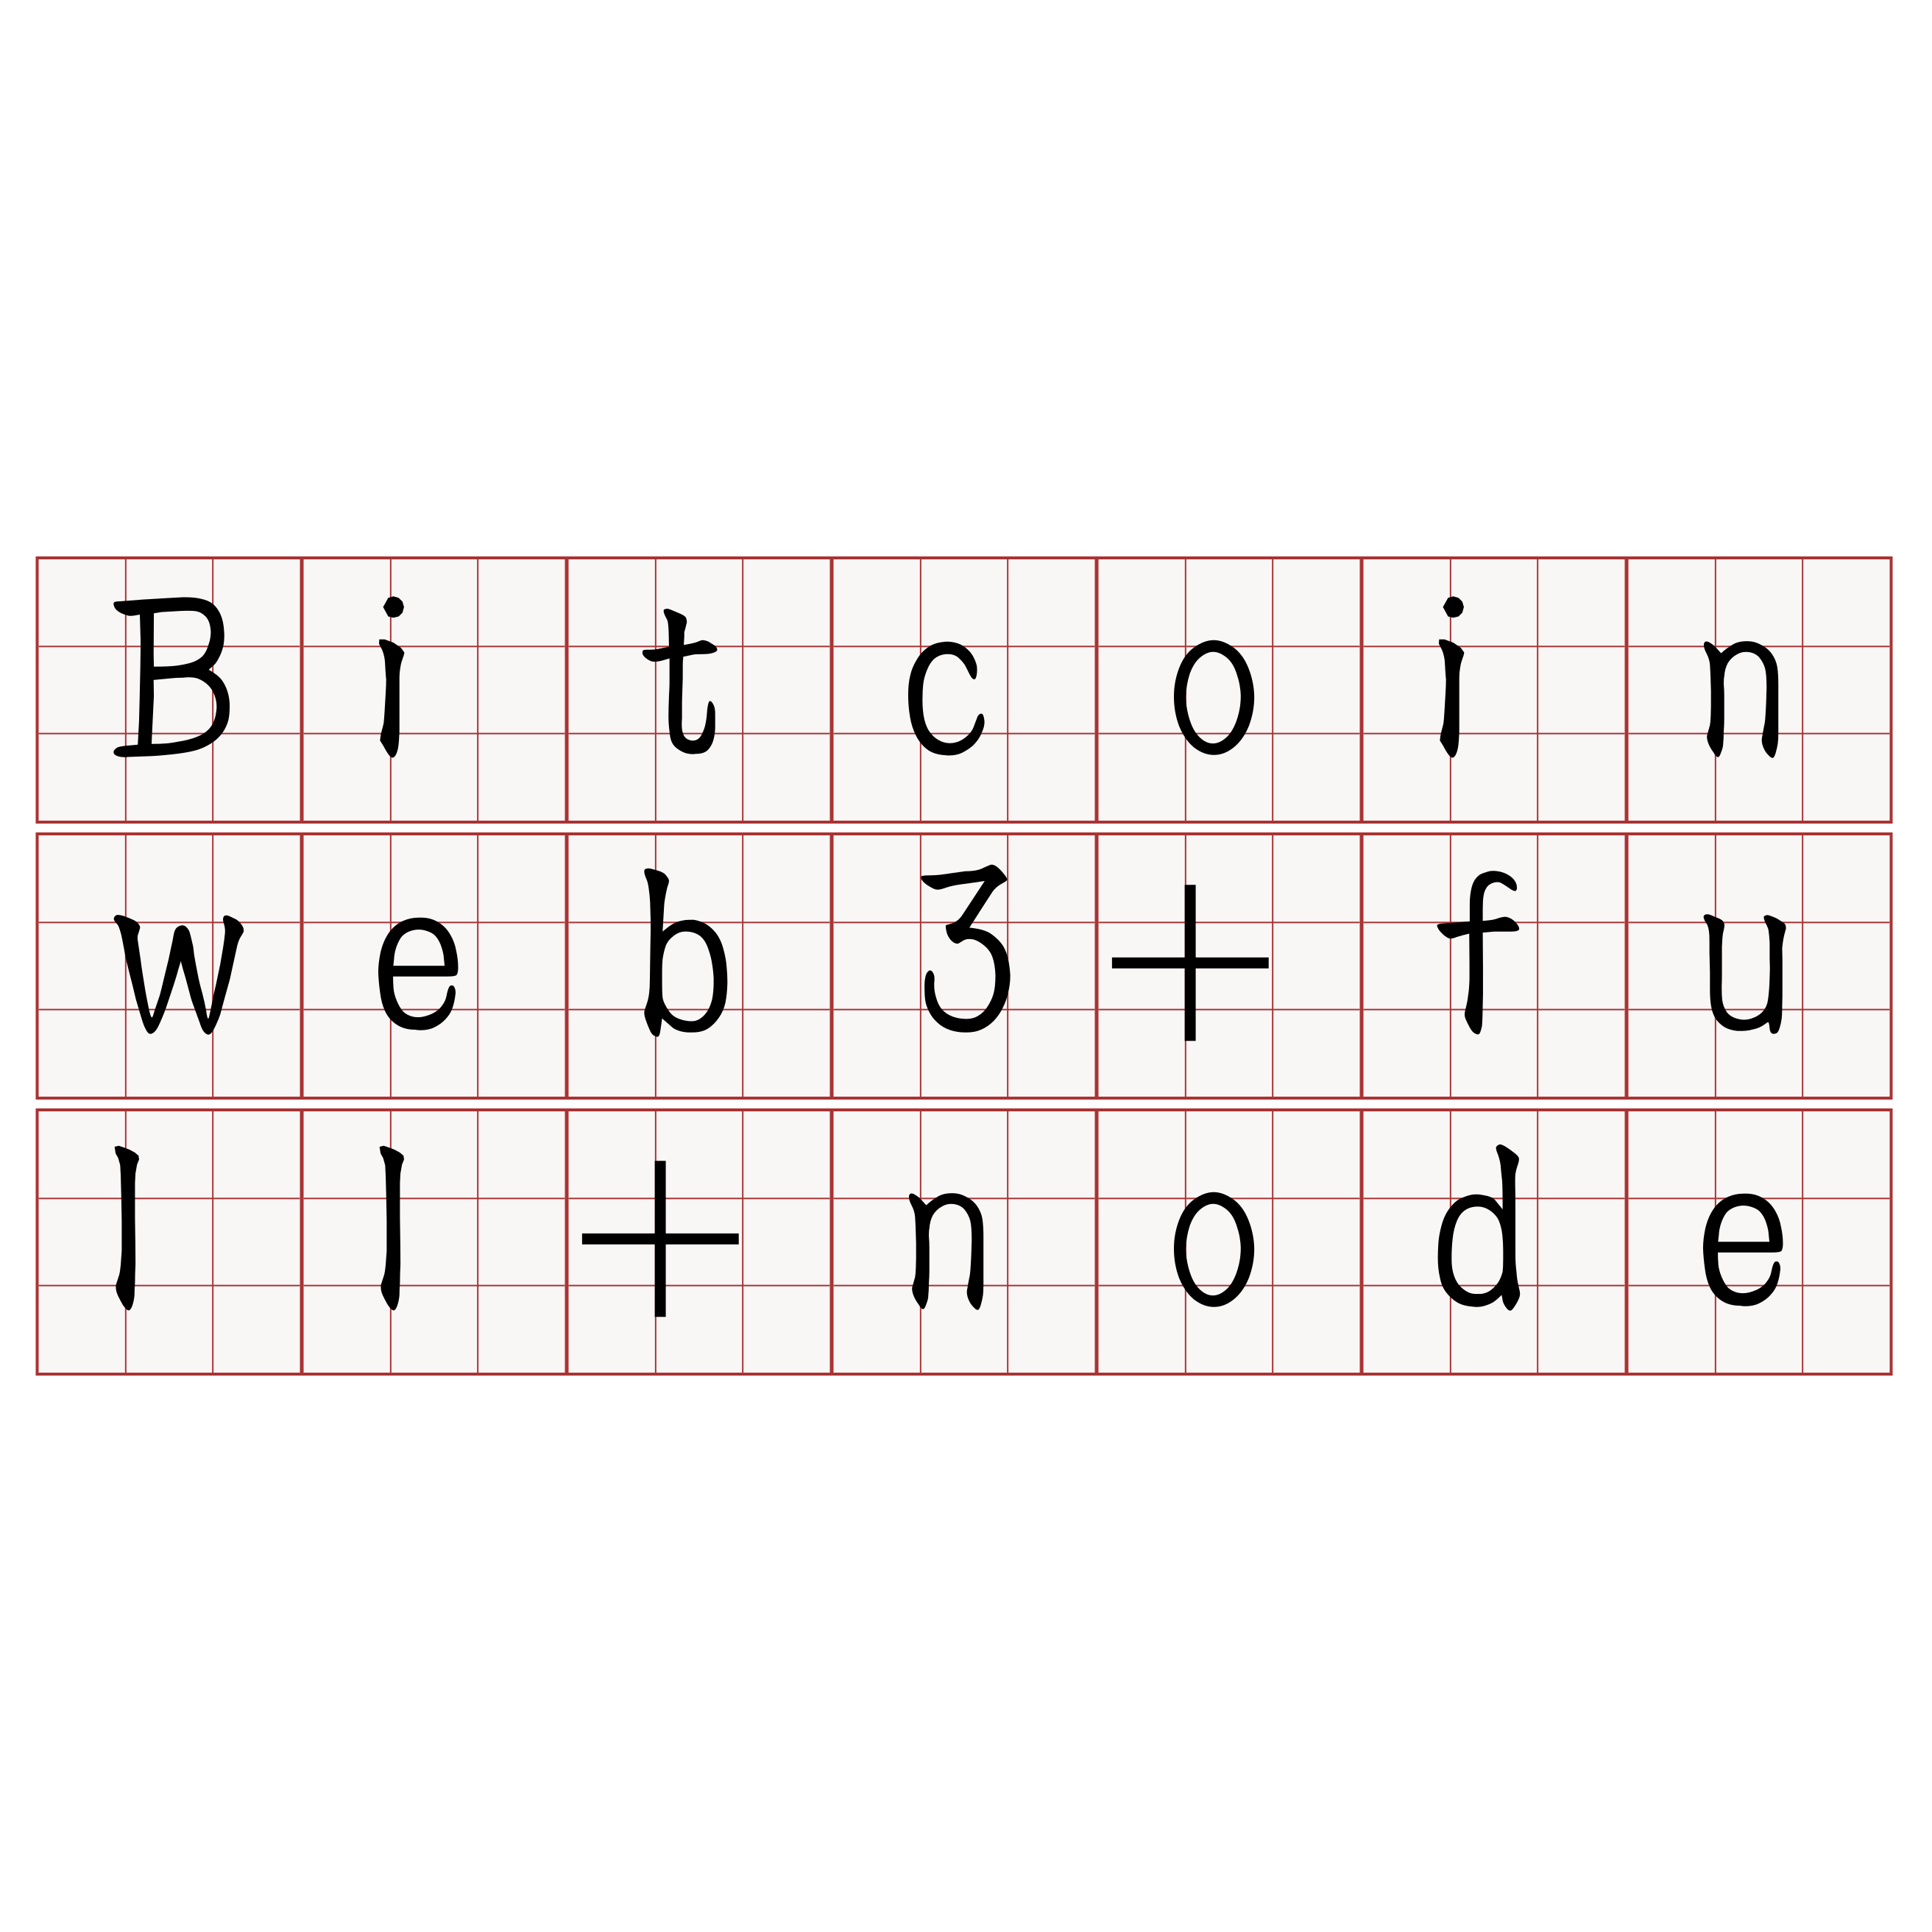 Bitcoinweb3+full+node